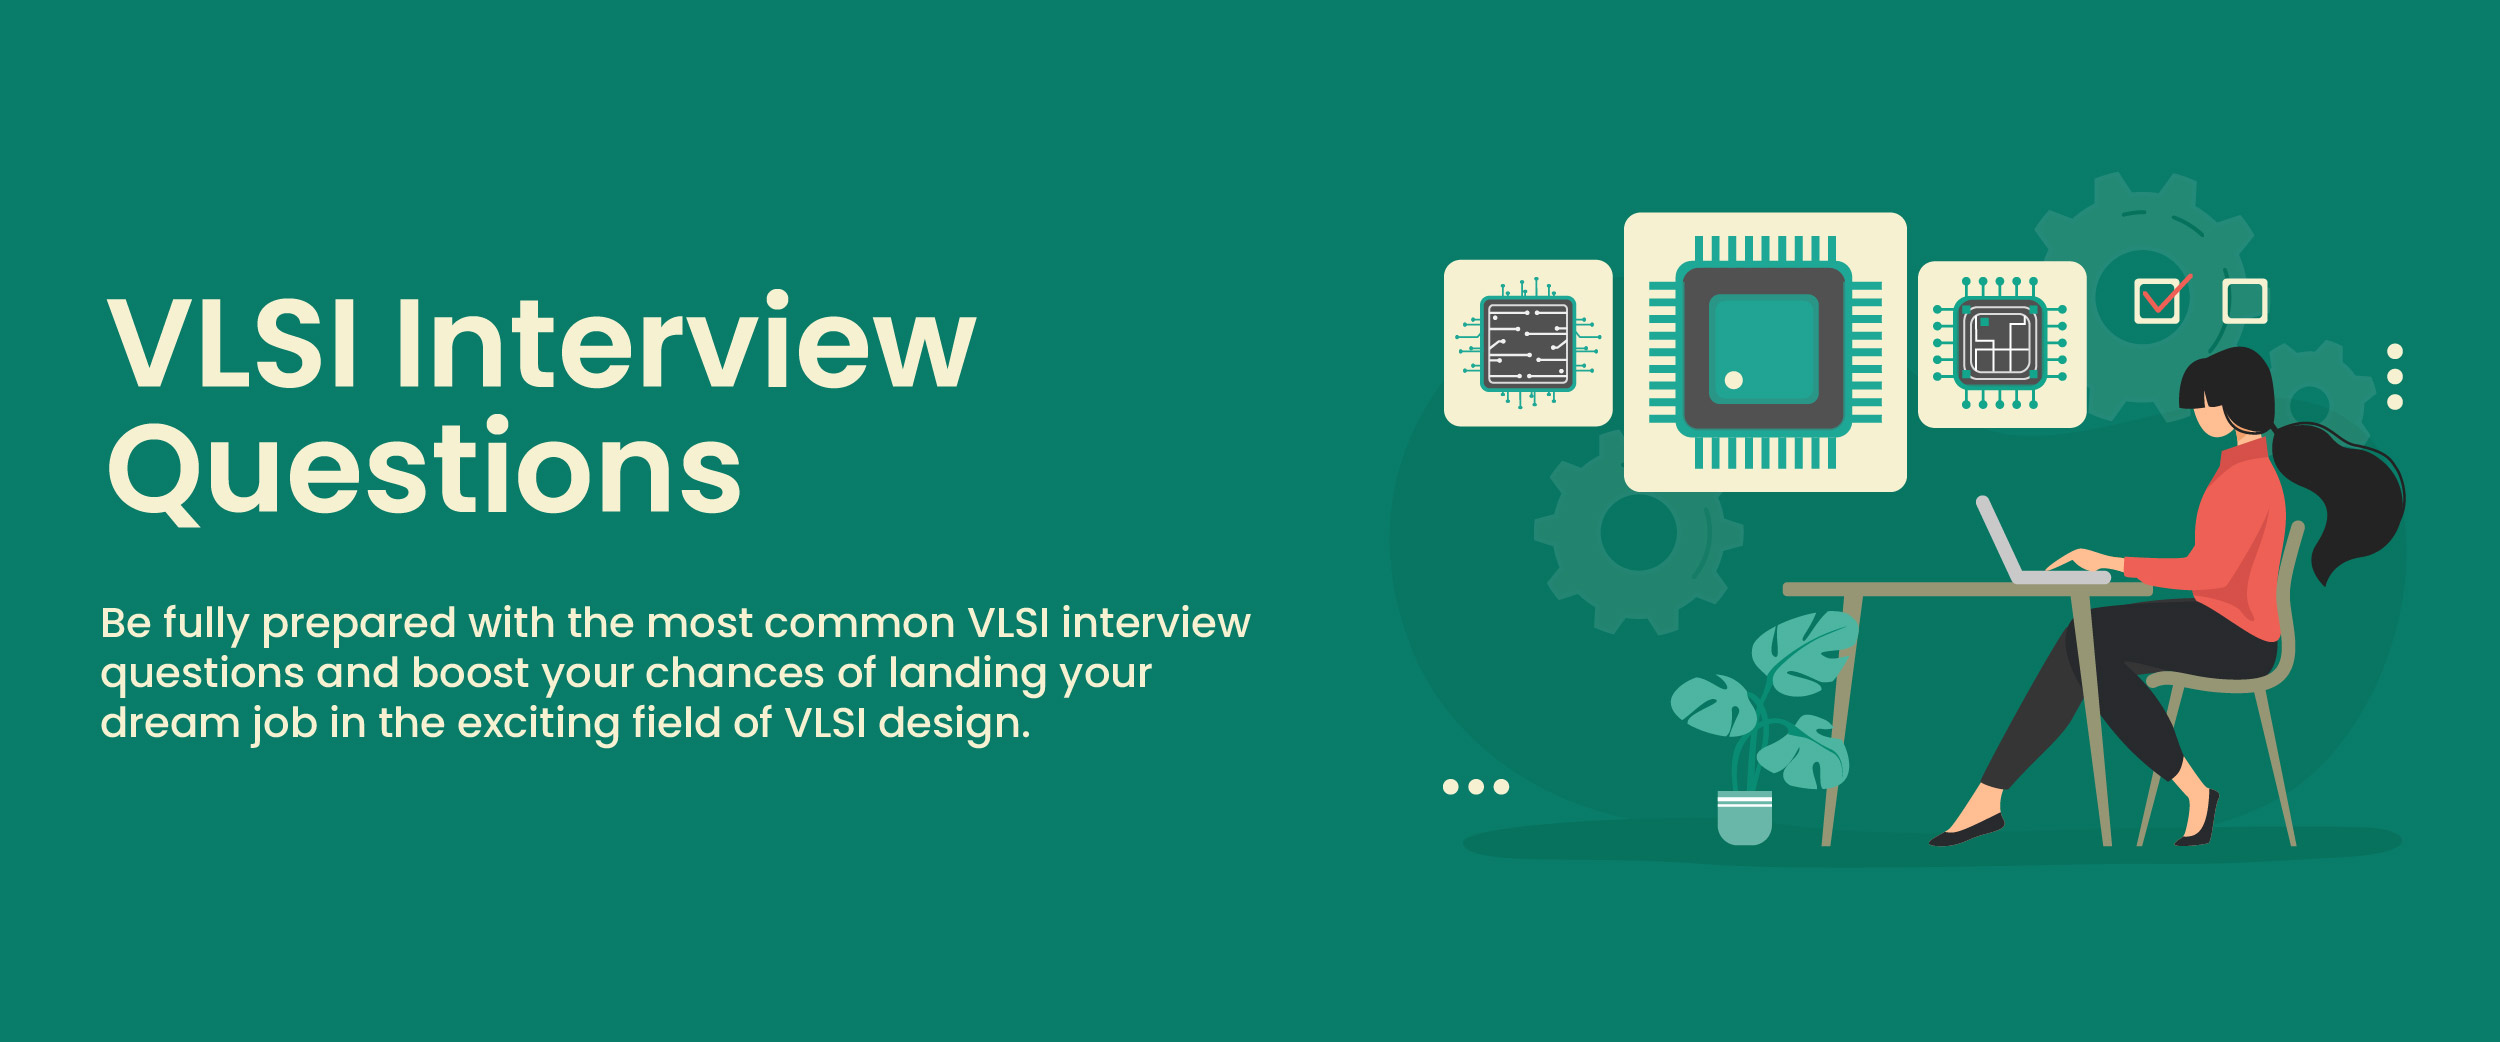 VLSI interview questions